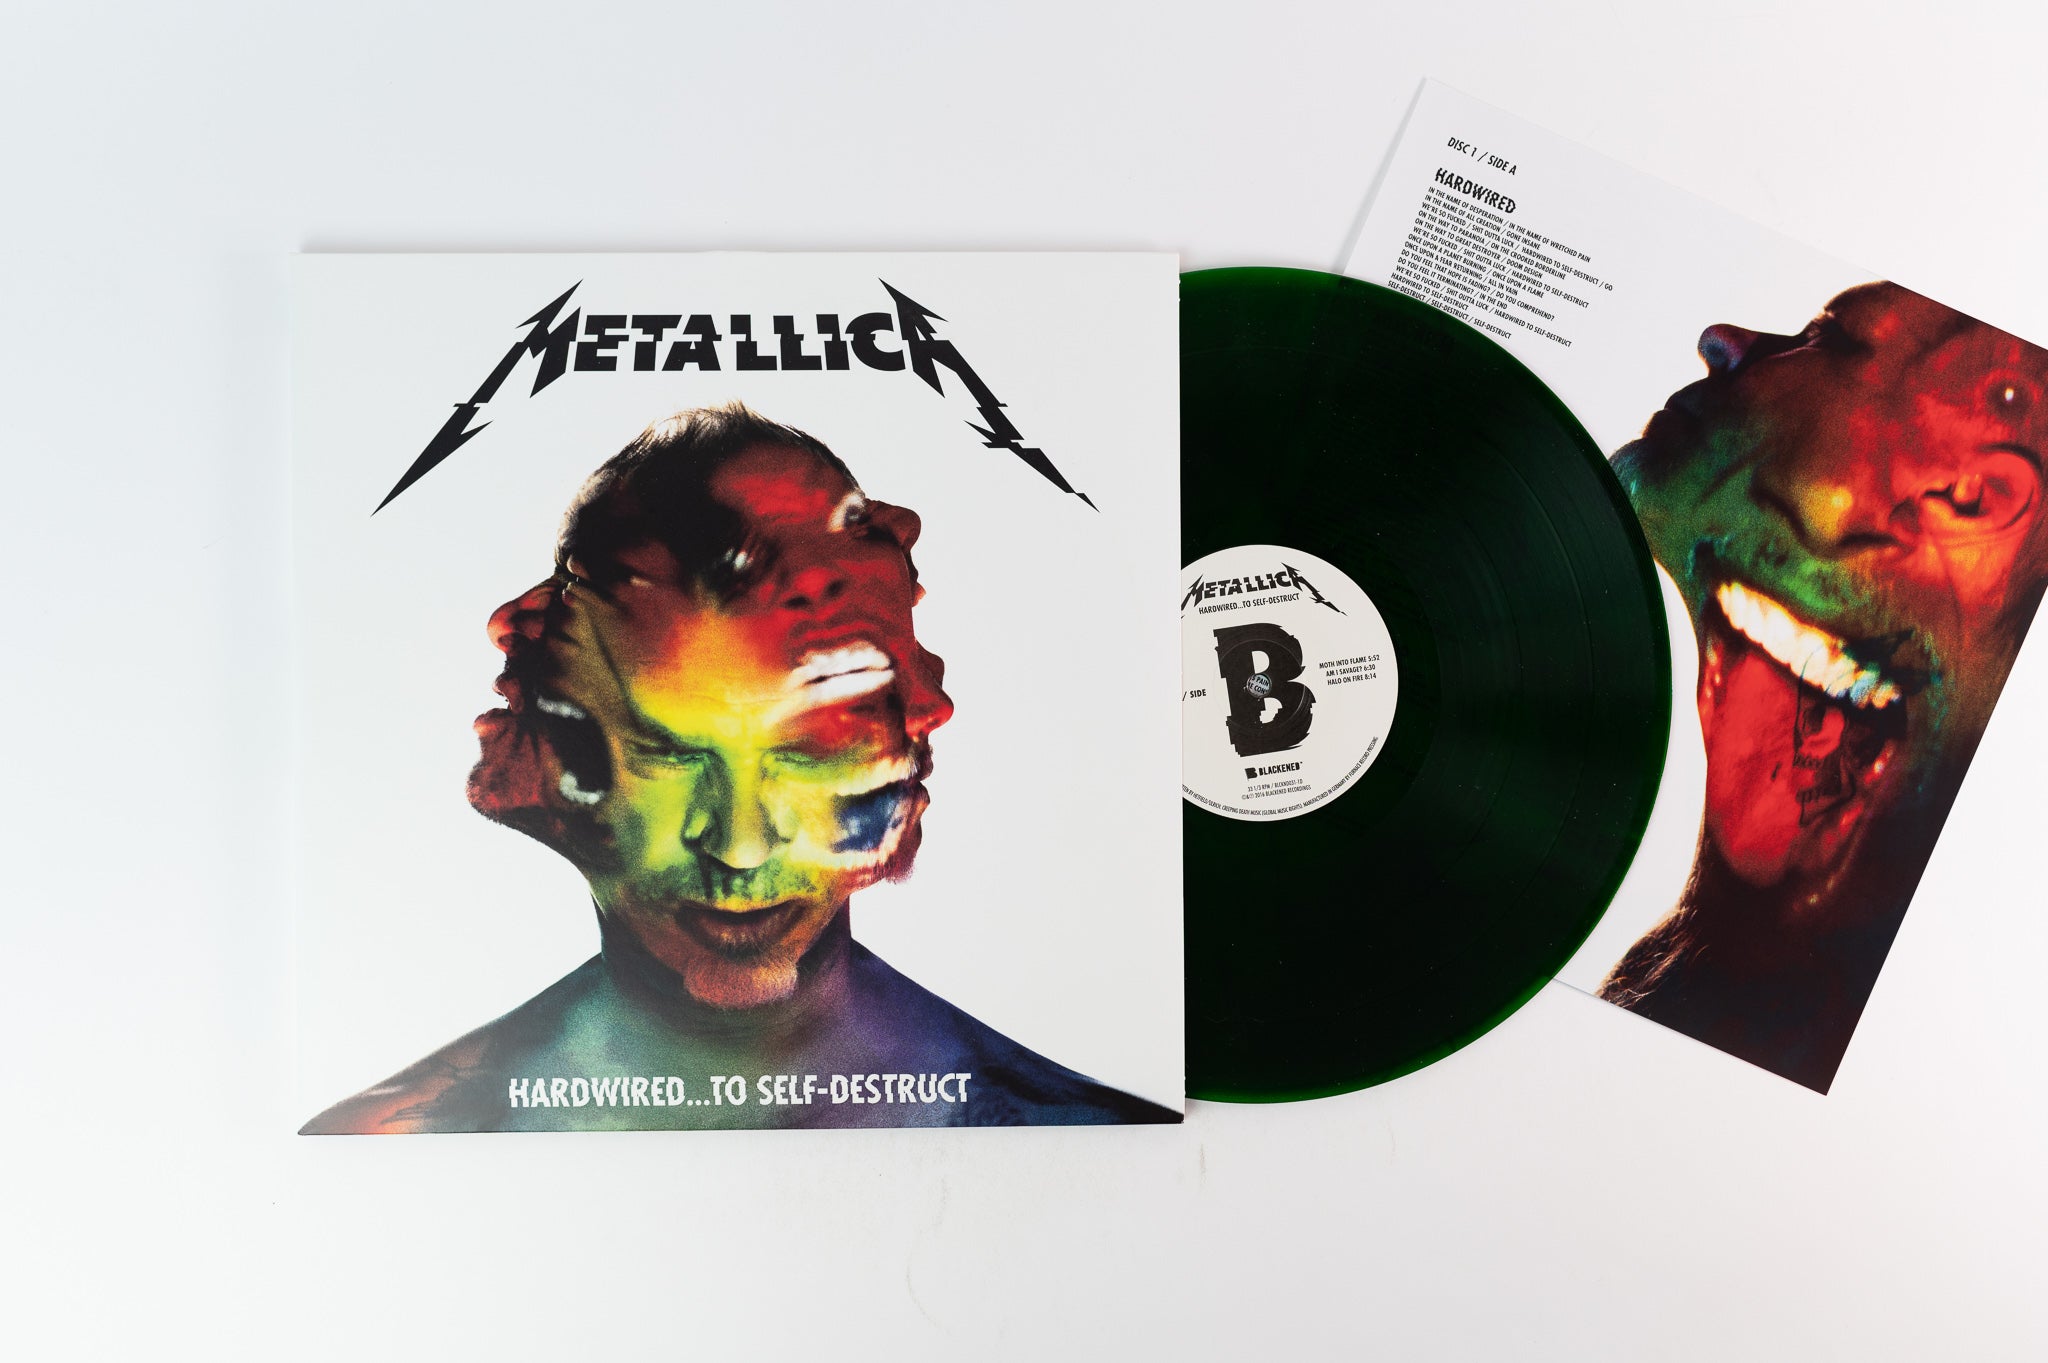 Metallica - Hardwired...To Self-Destruct on Blackened - Limited Green Vinyl